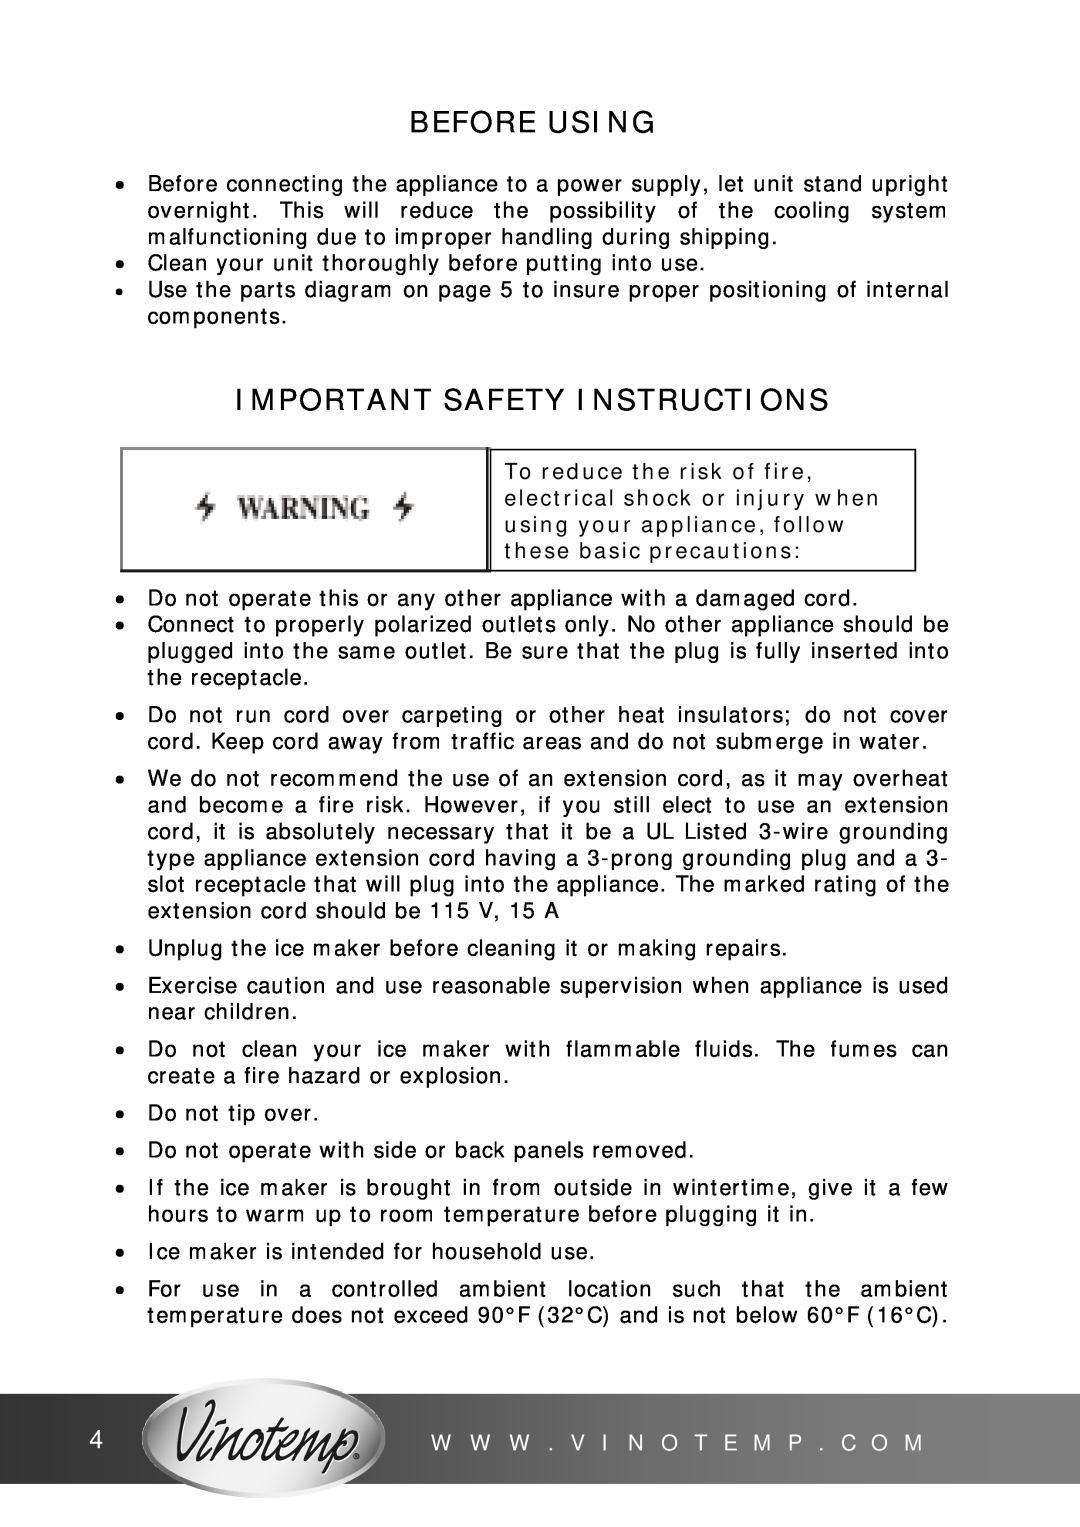 Vinotemp V T - I C E M P 2 5 owner manual Before Using, Important Safety Instructions, W W W . V I N O T E M P . C O M 